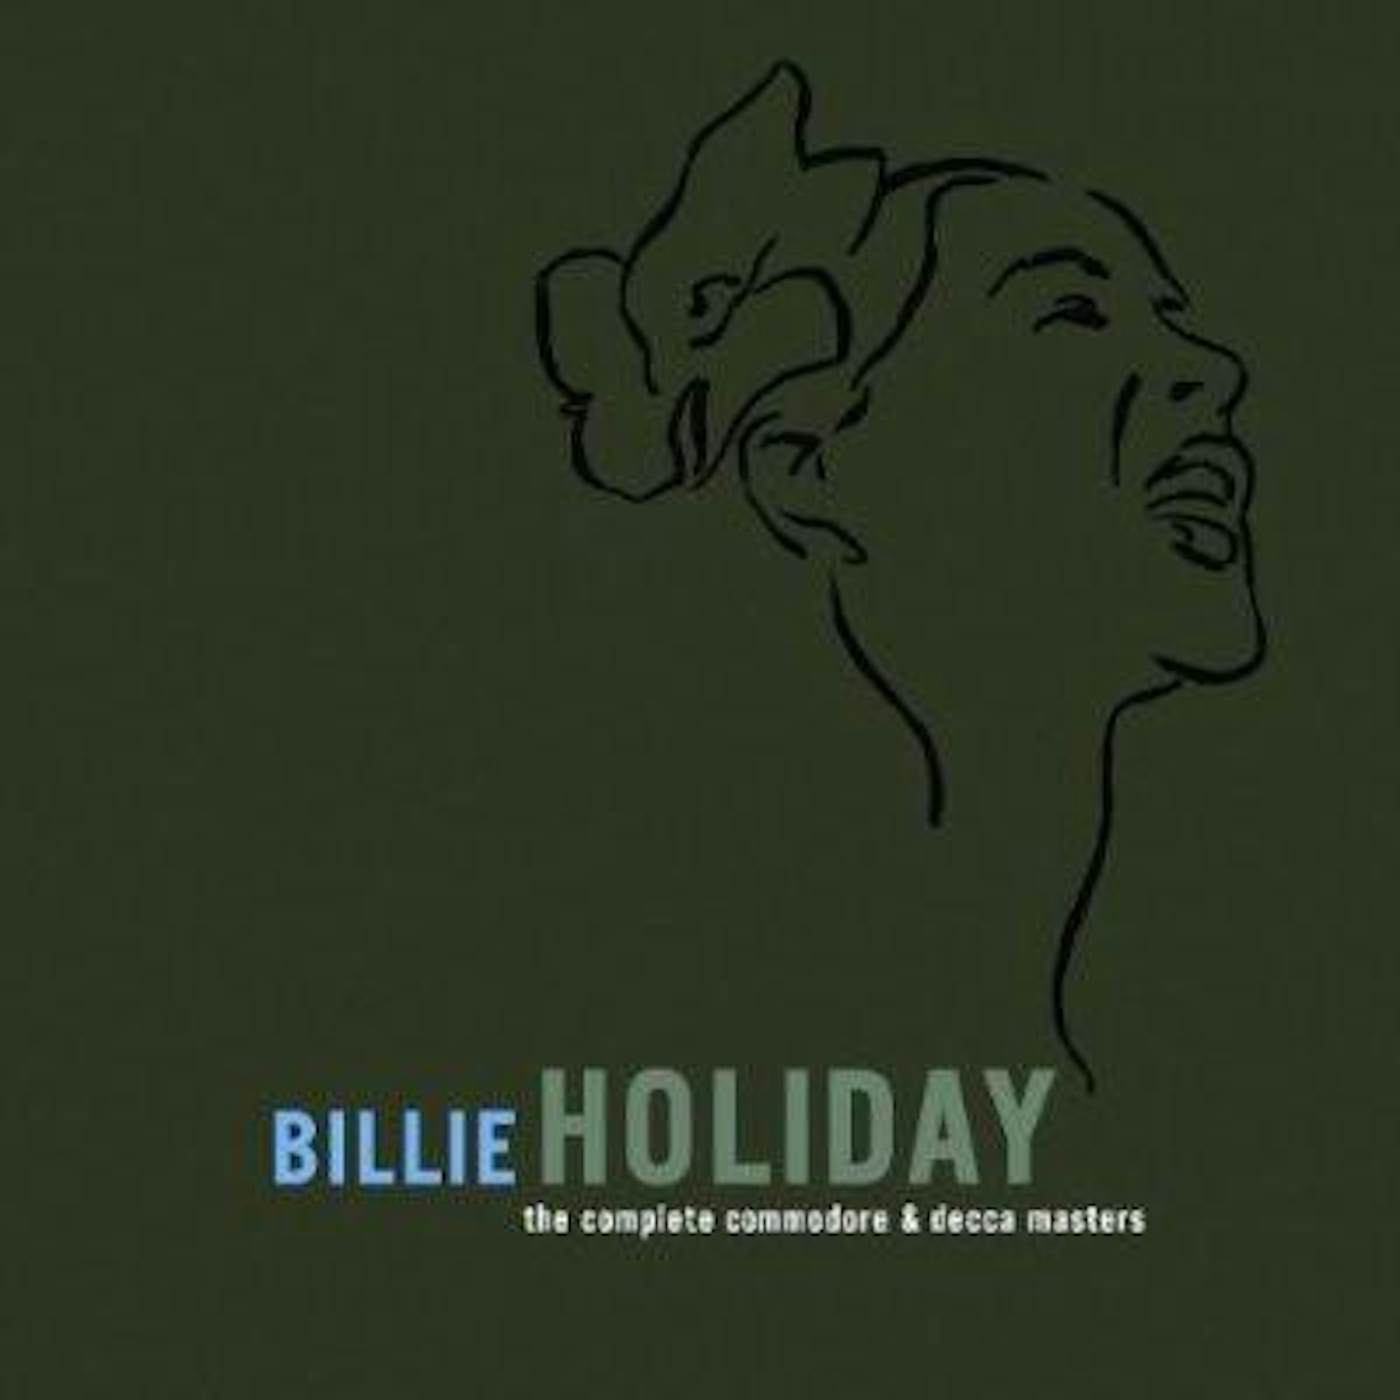 Billie Holiday COMPLETE COMMODORE MASTERS Vinyl Record - Brown Vinyl, Colored Vinyl, 180 Gram Pressing